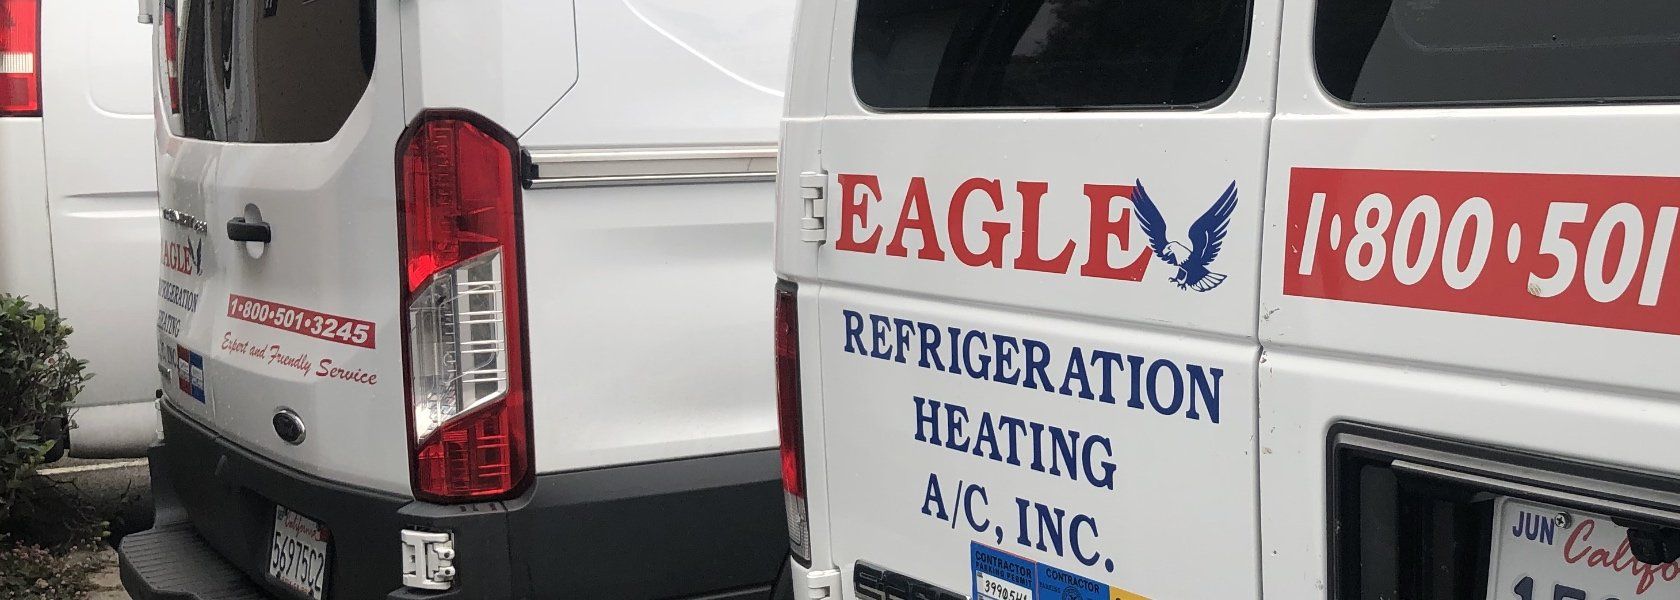 Eagle Refrigeration Heating & A/C Inc 200 Valley Dr #42, Brisbane California 94005